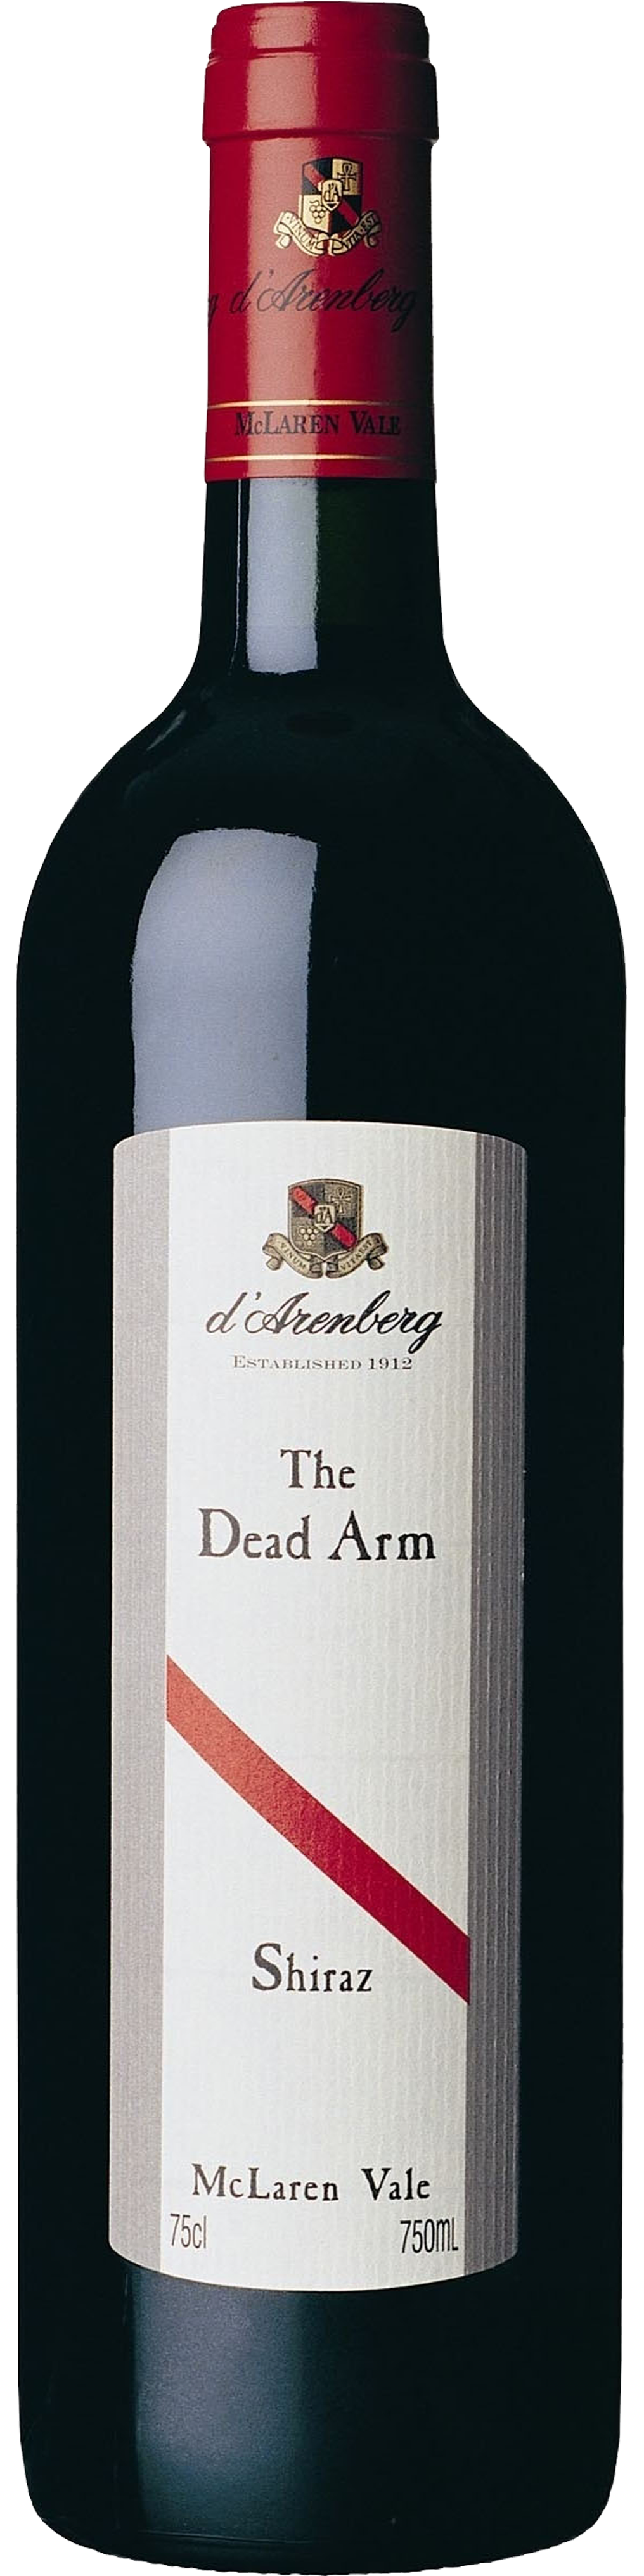 Bottle shot of 2009 The Dead Arm Shiraz